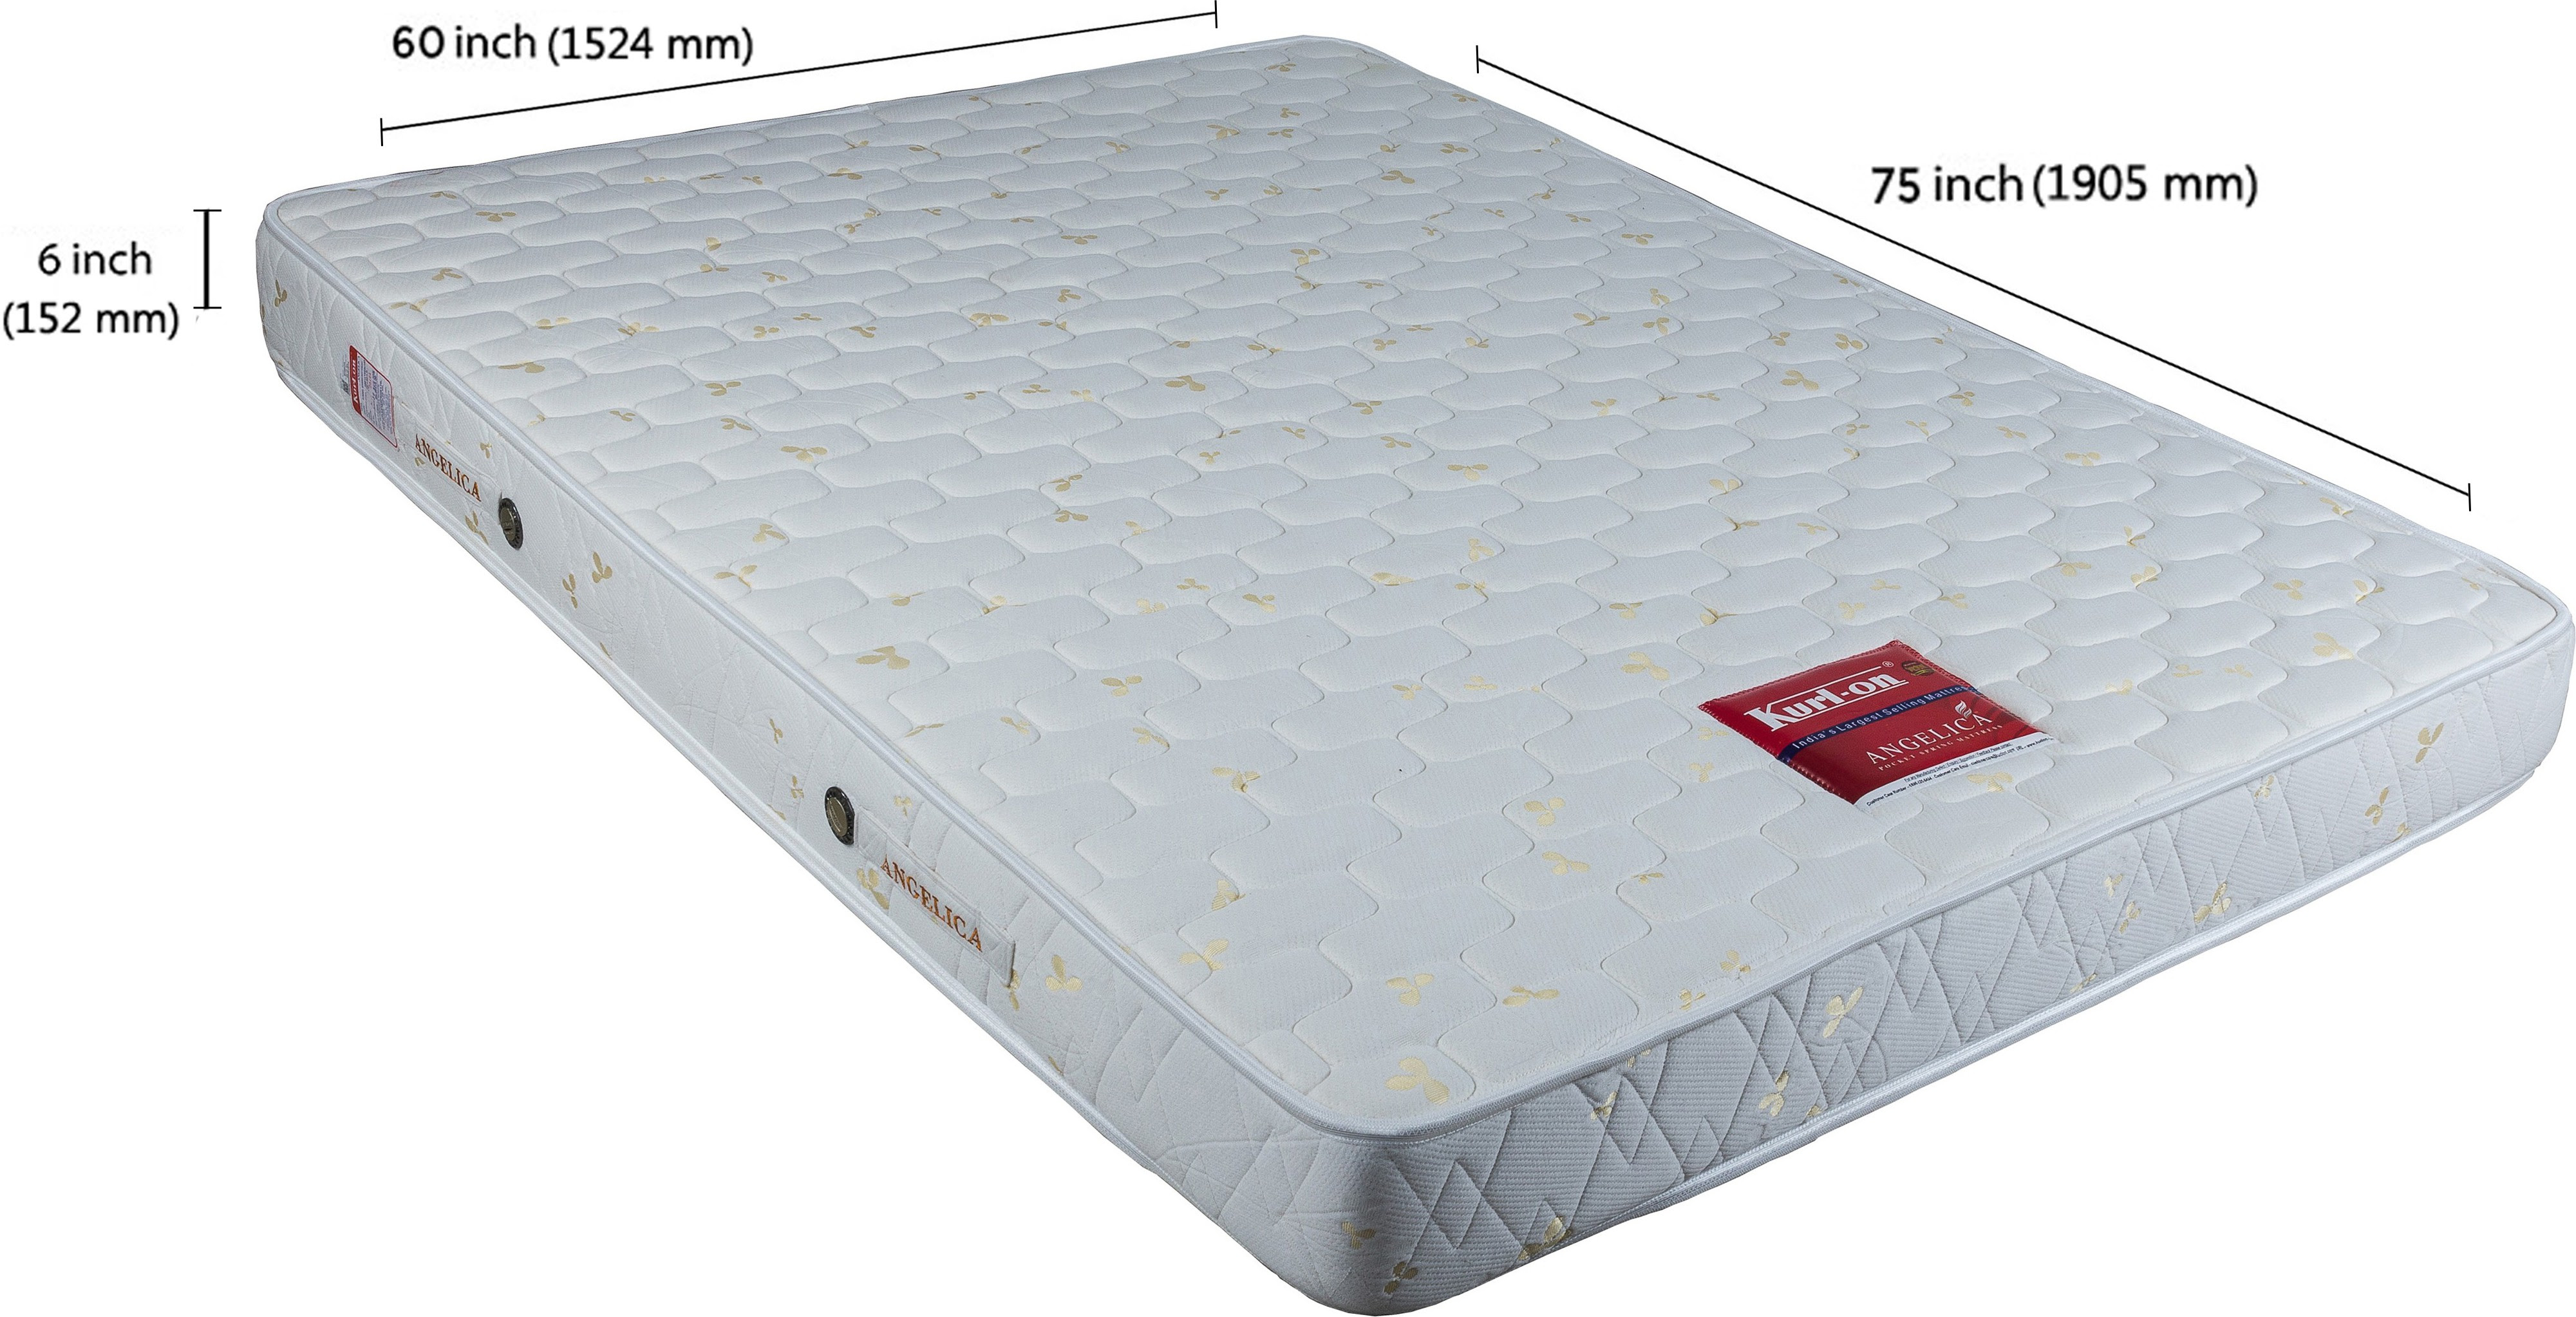 kurl on 3 6 mattress price